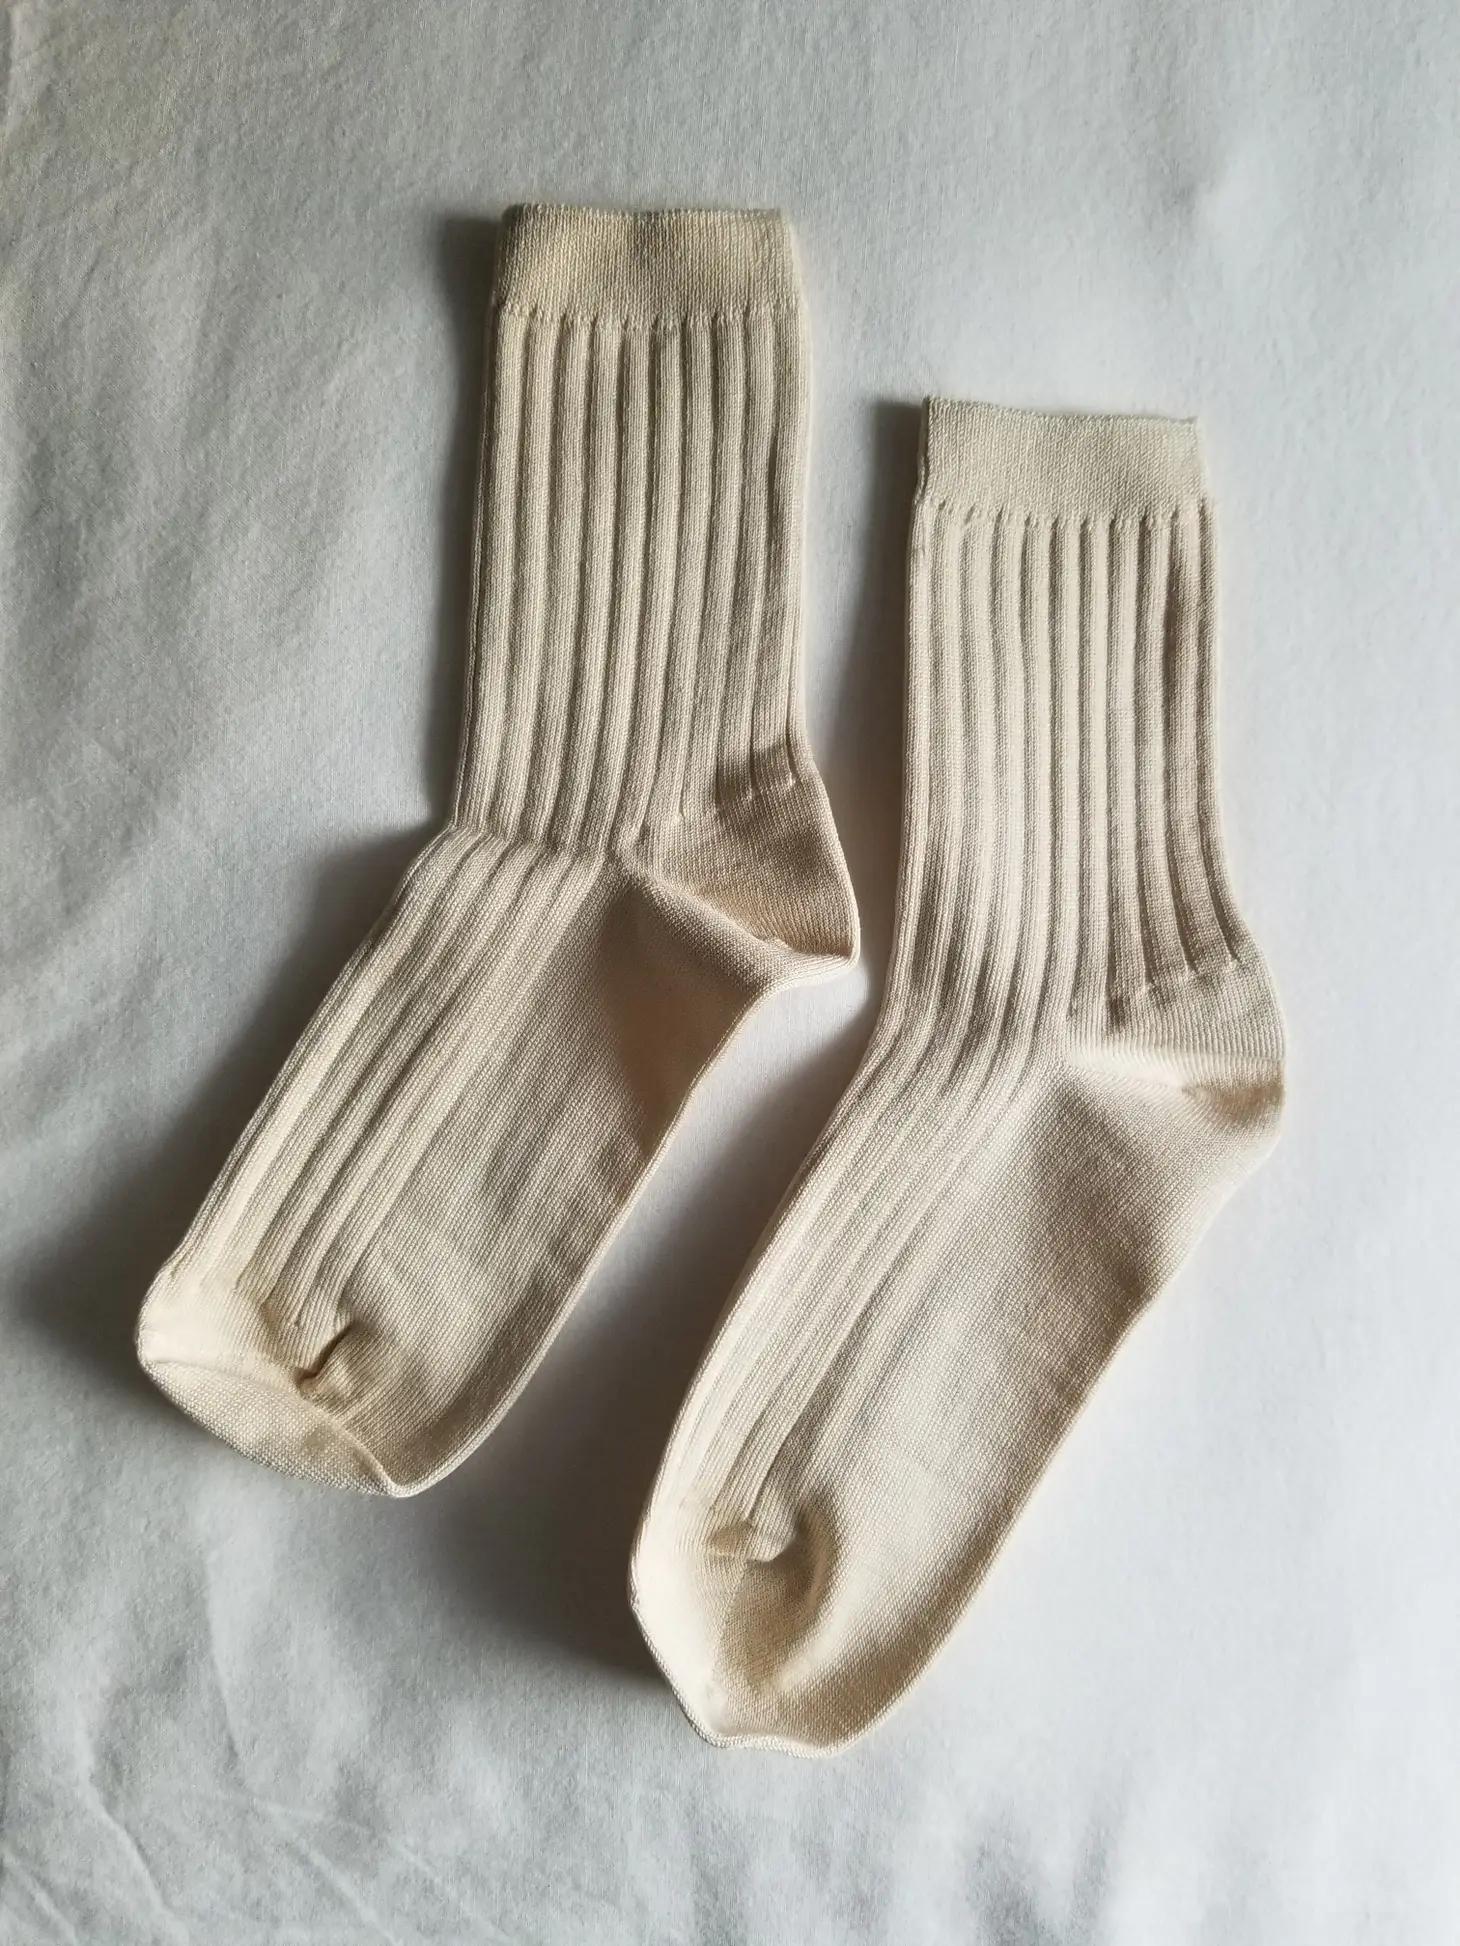 Product Image for Her Socks, Porcelain